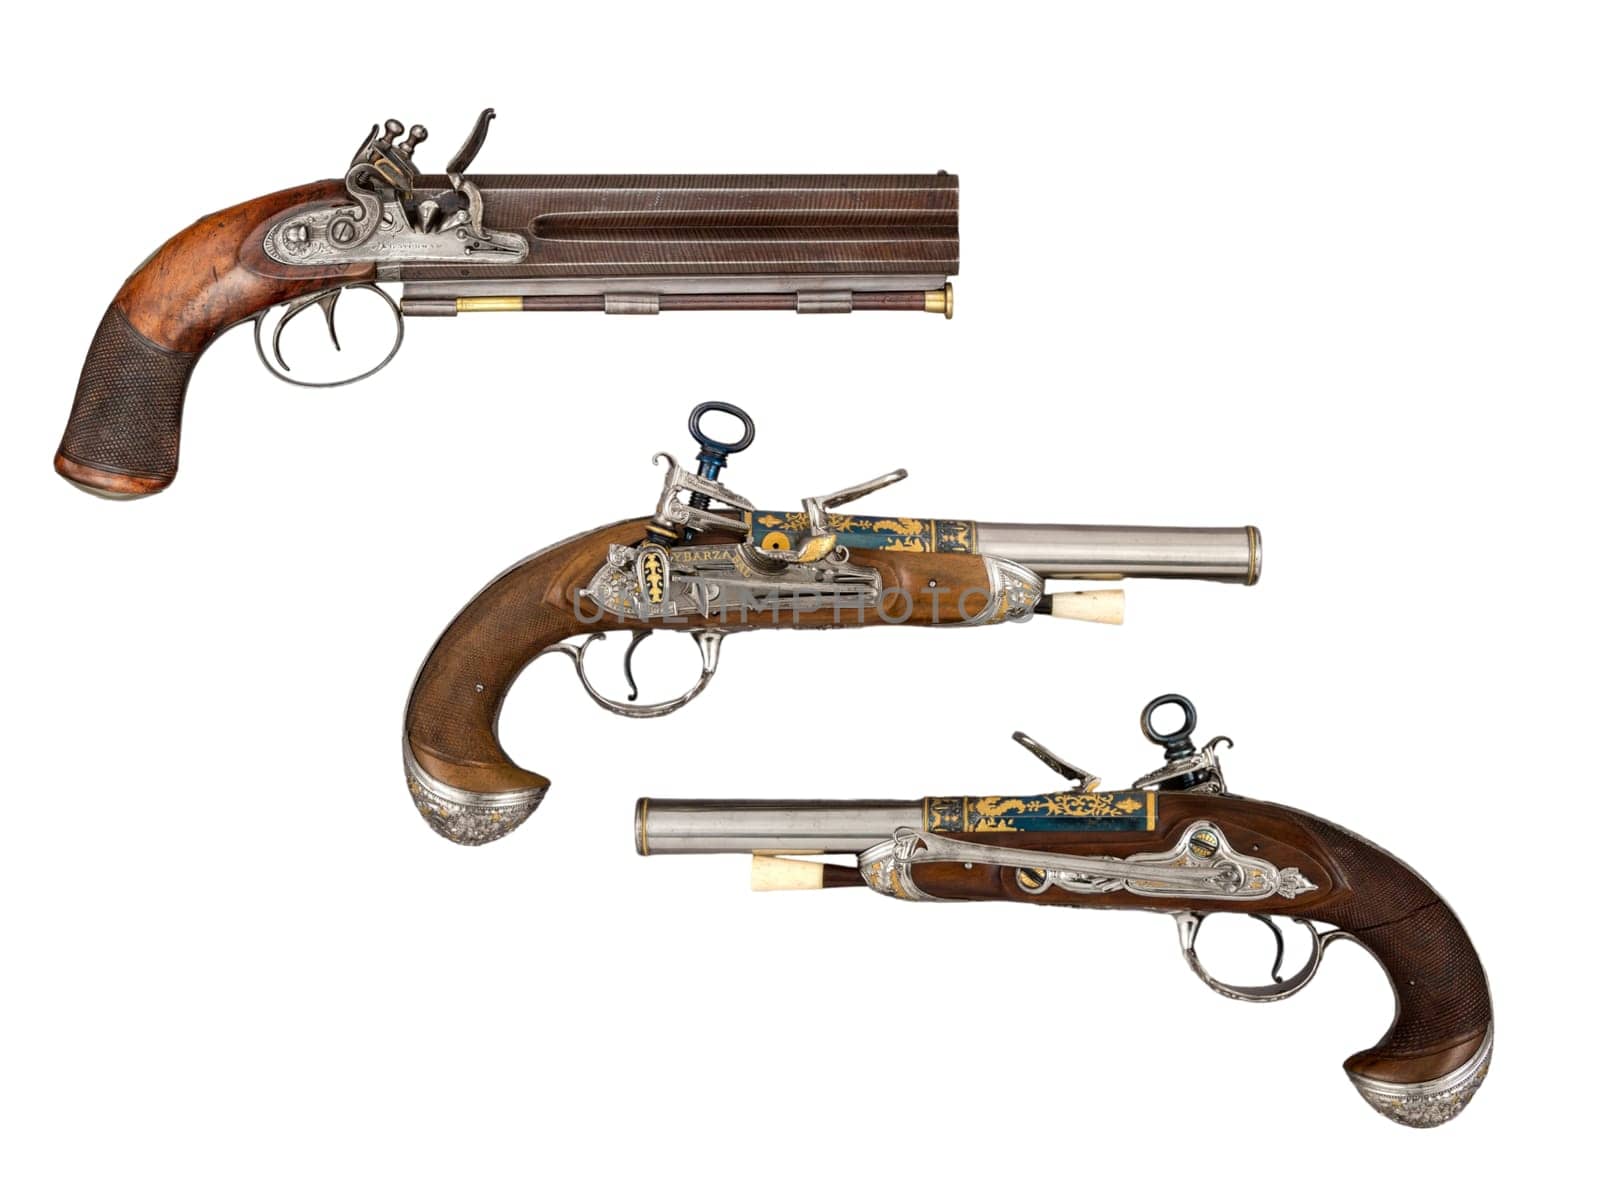 antique vintage handguns isolated background by gallofoto